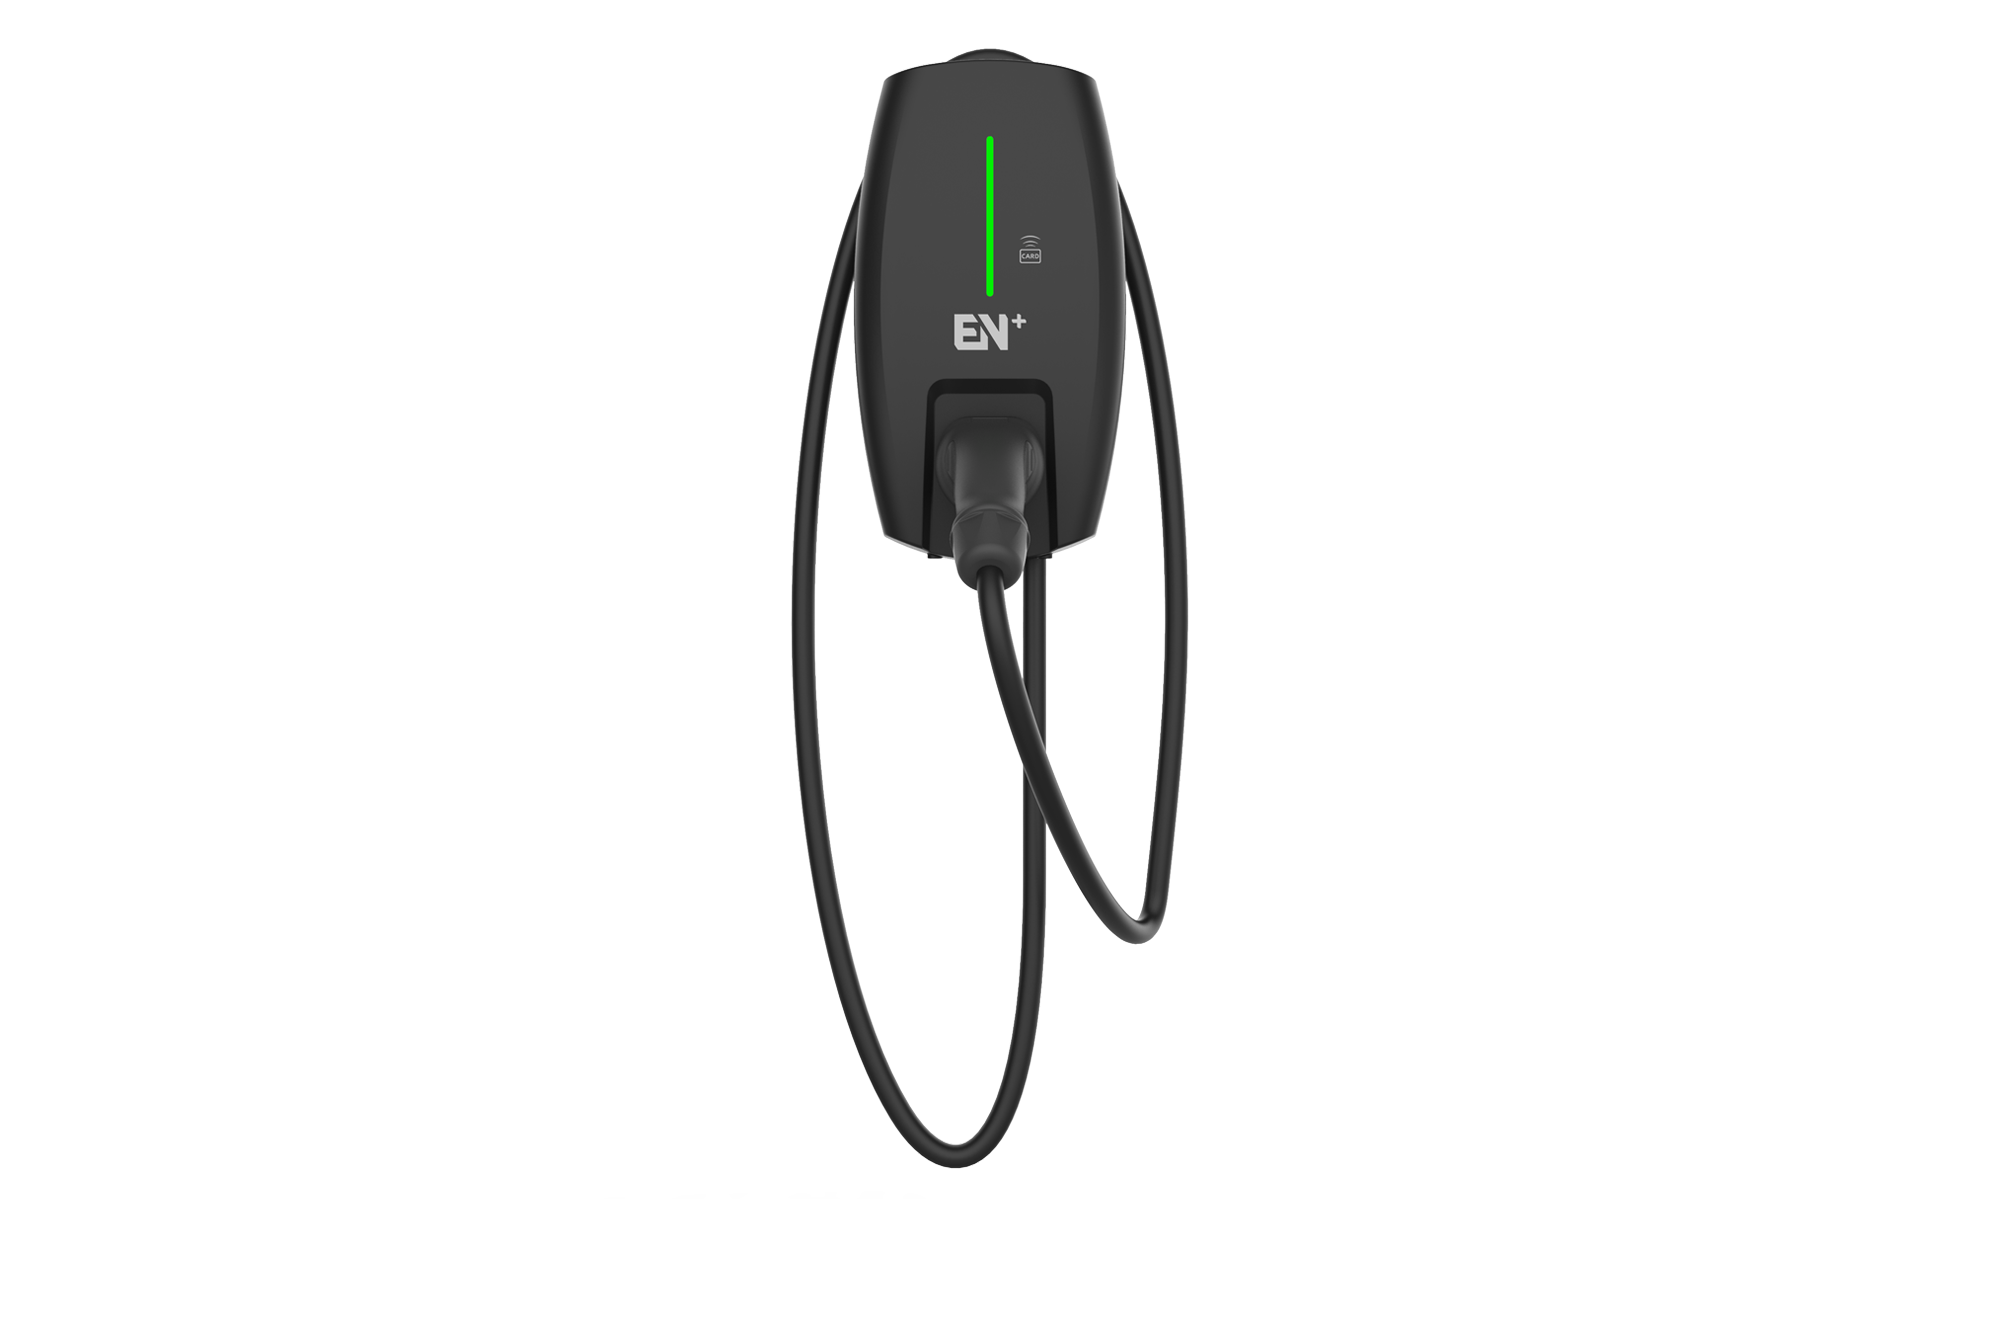 https://evchargeplus.com/wp-content/uploads/2021/12/EV-Charging-Station-Smart-Home-Wallbox-7-kw.png